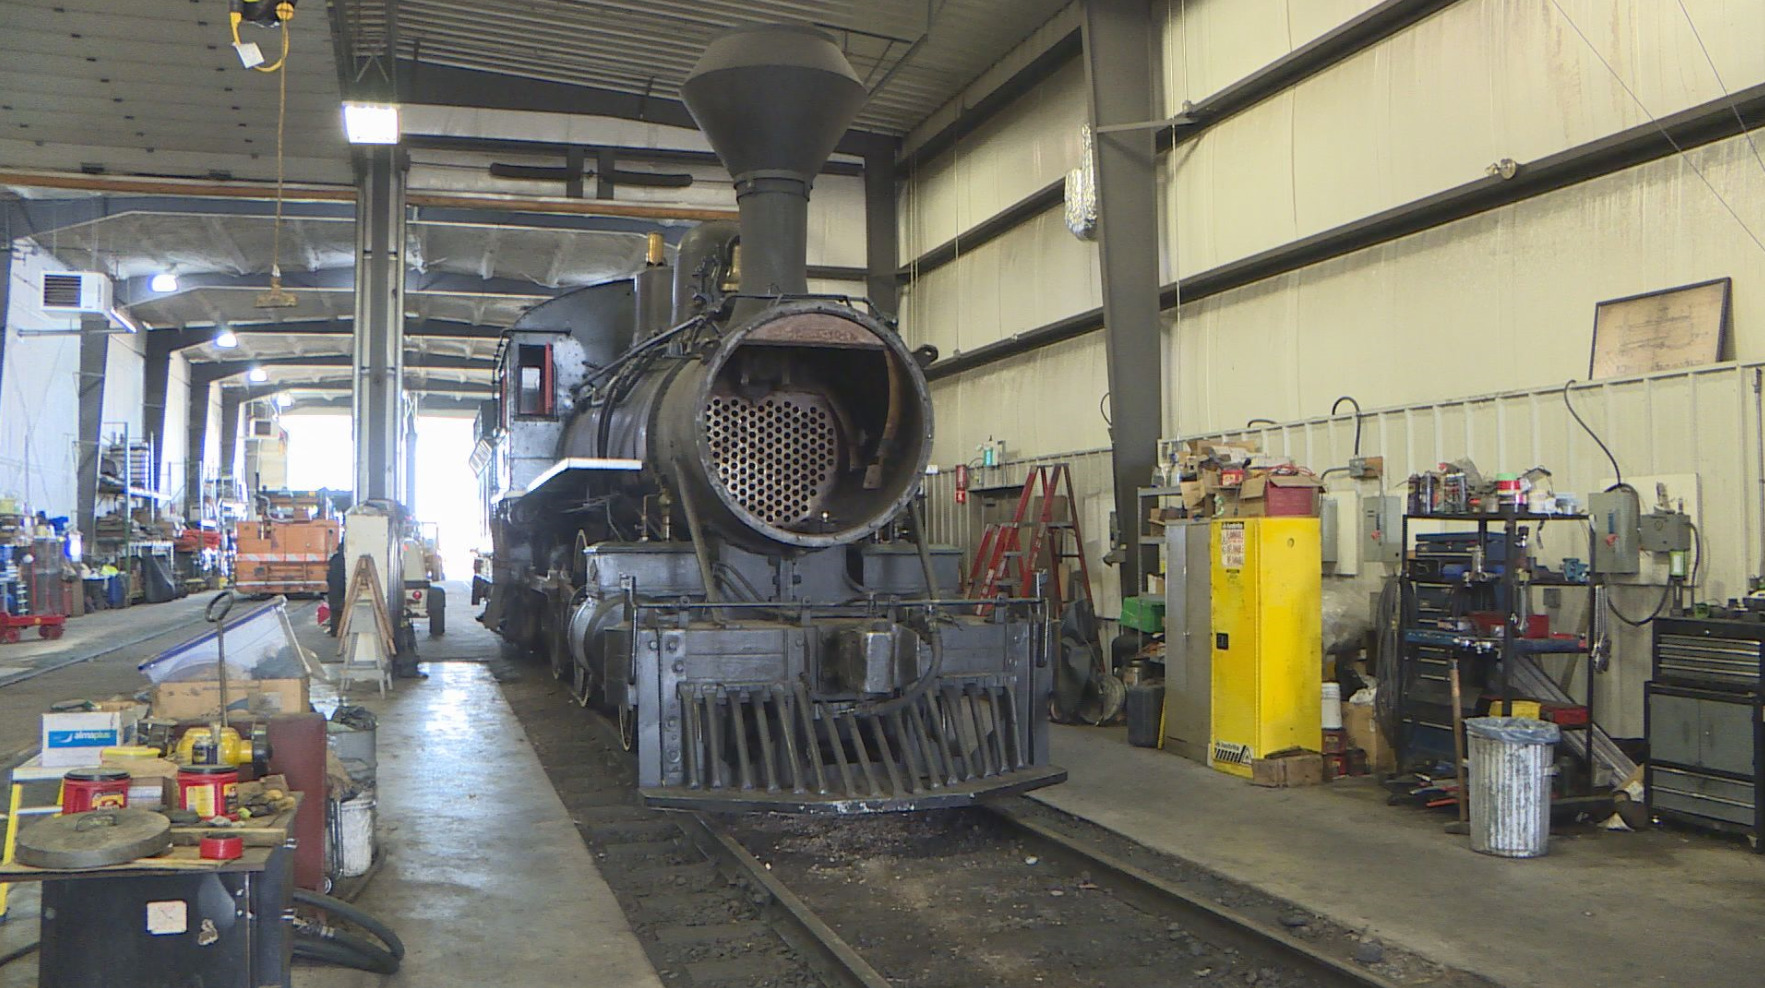 Canada's oldest operating steam locomotive in desperate need of repairs.